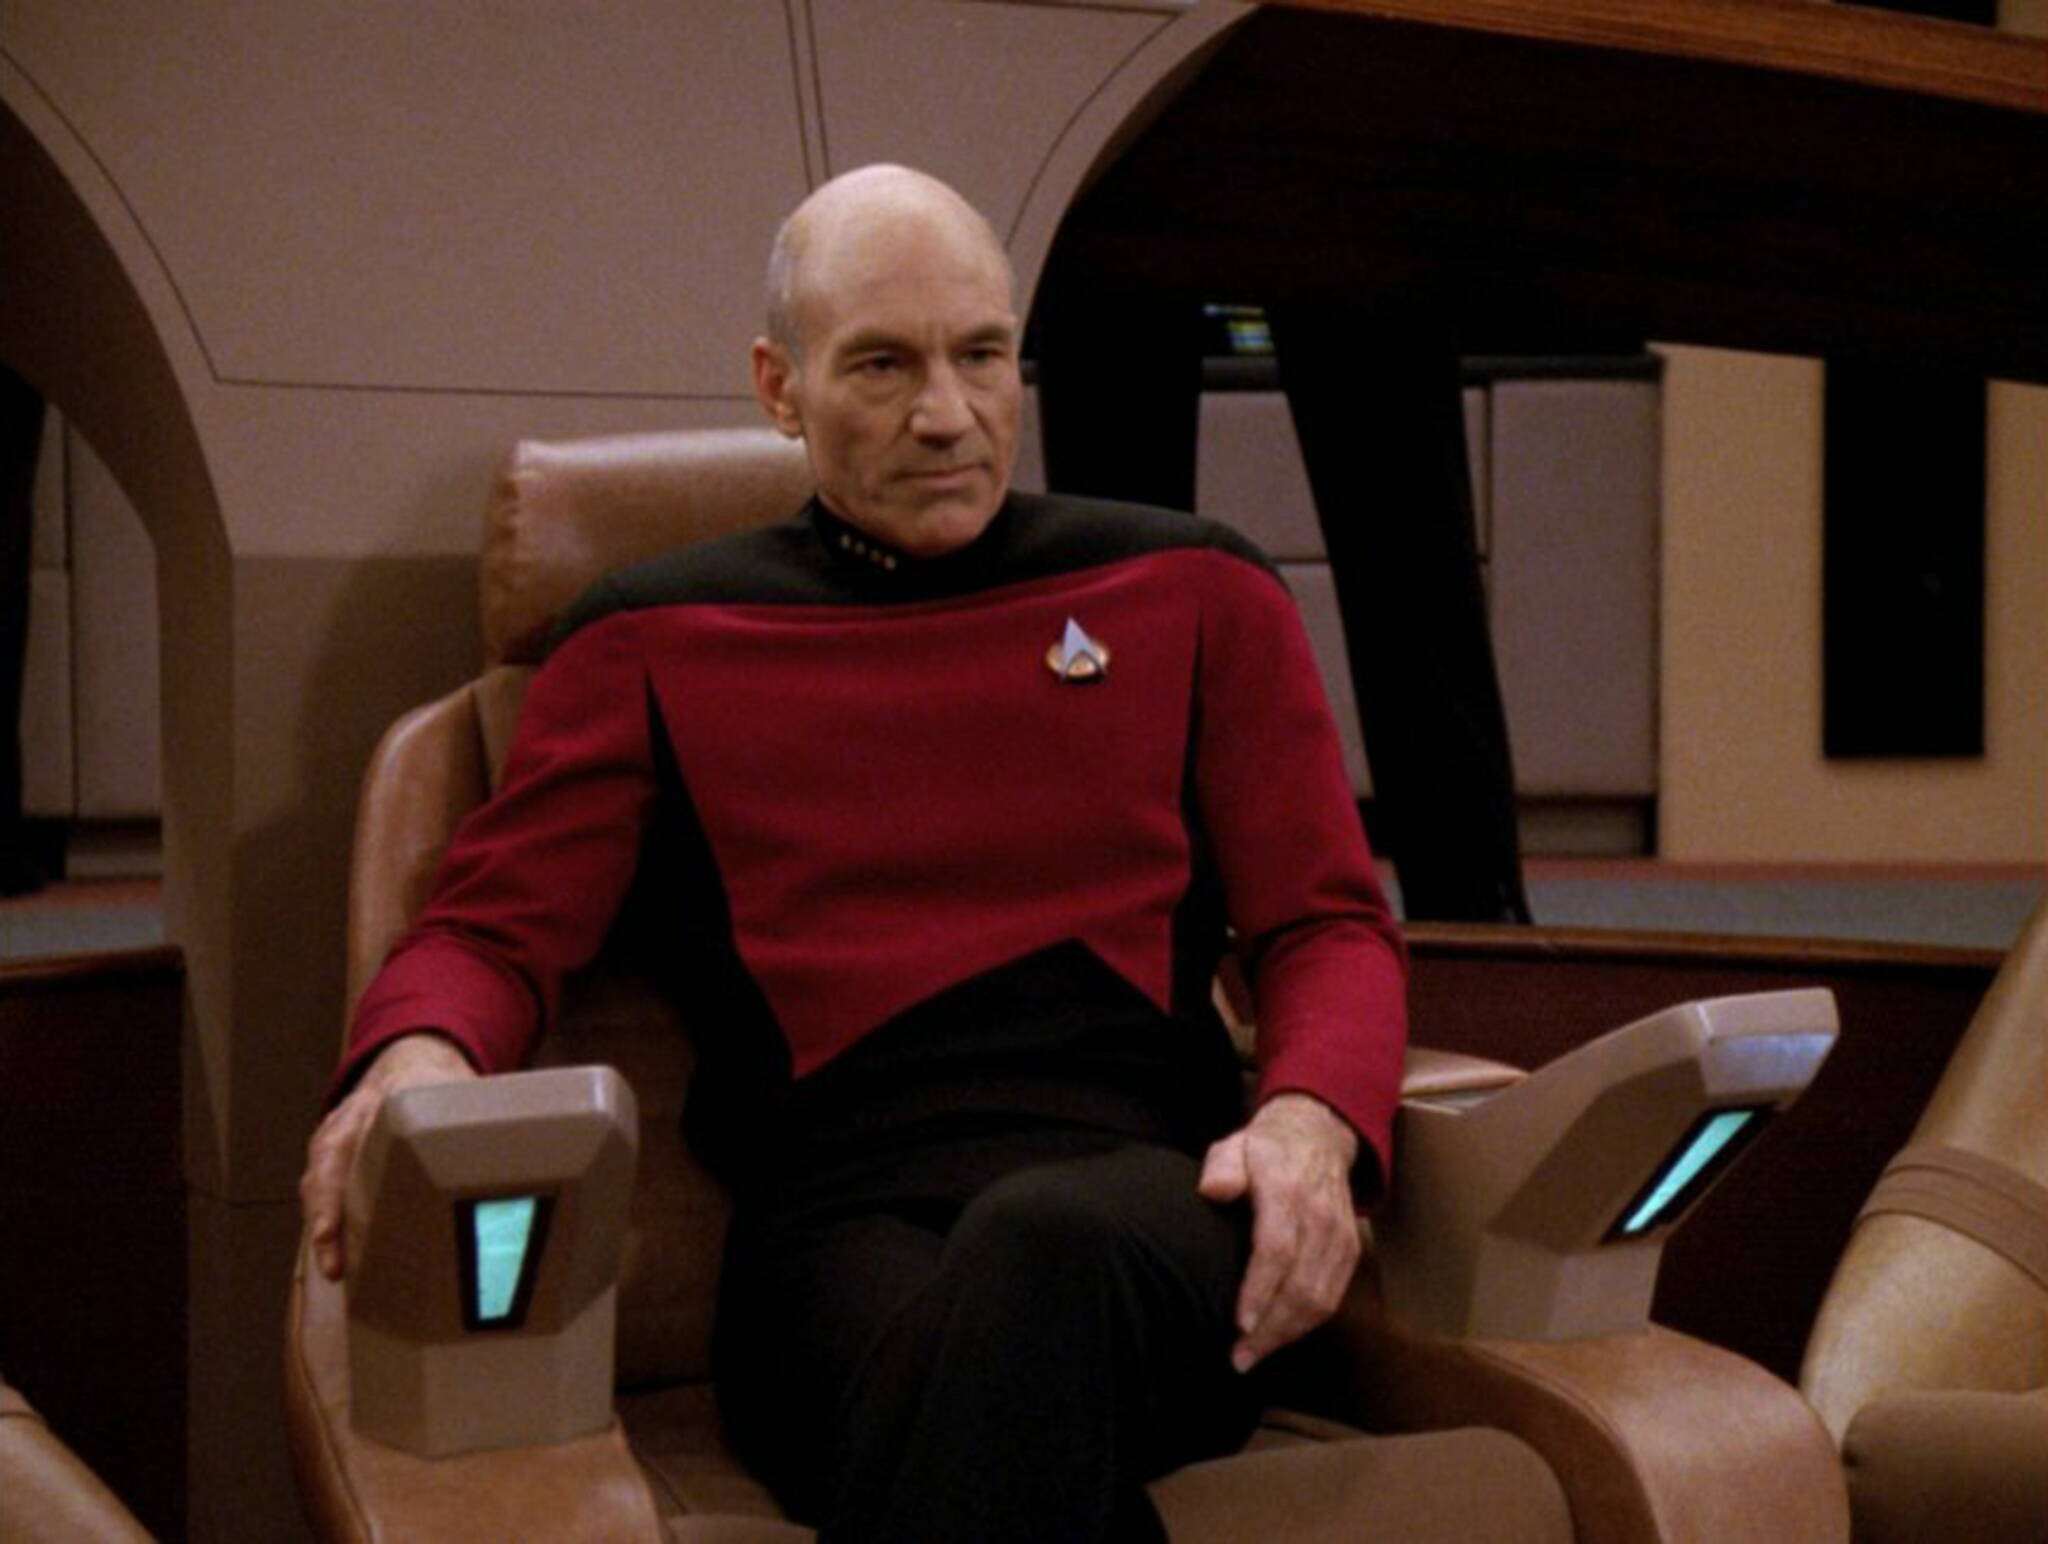 Patrick Stewart in "Star Trek: The Next Generation." (Photo courtesy Paramount Pictures/TNS)